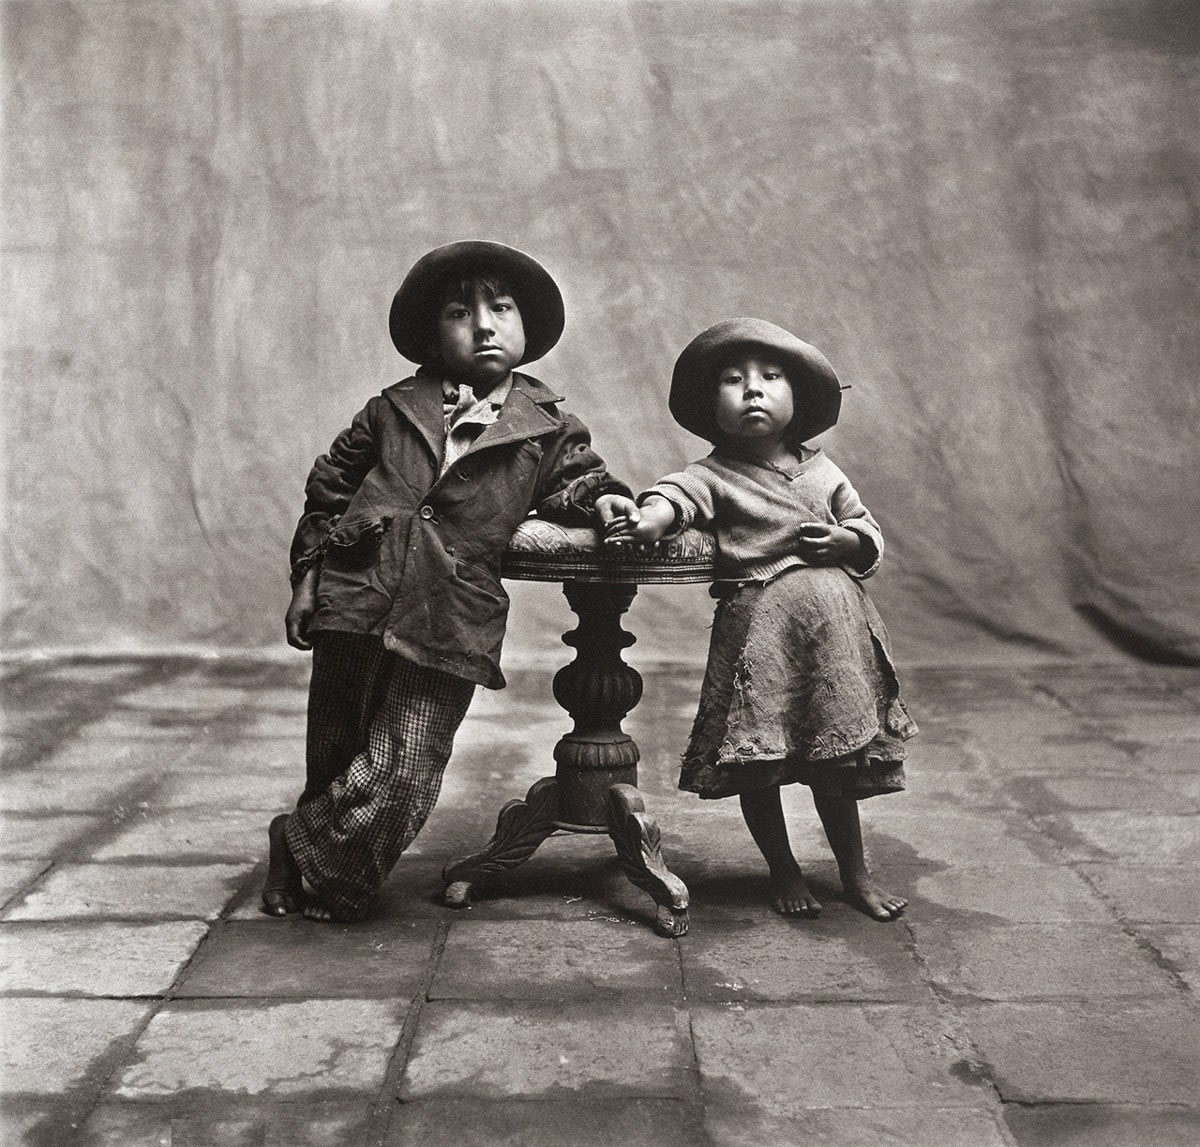 Irving Penn, Cuzco Children, Cuzco, Peru, 1948